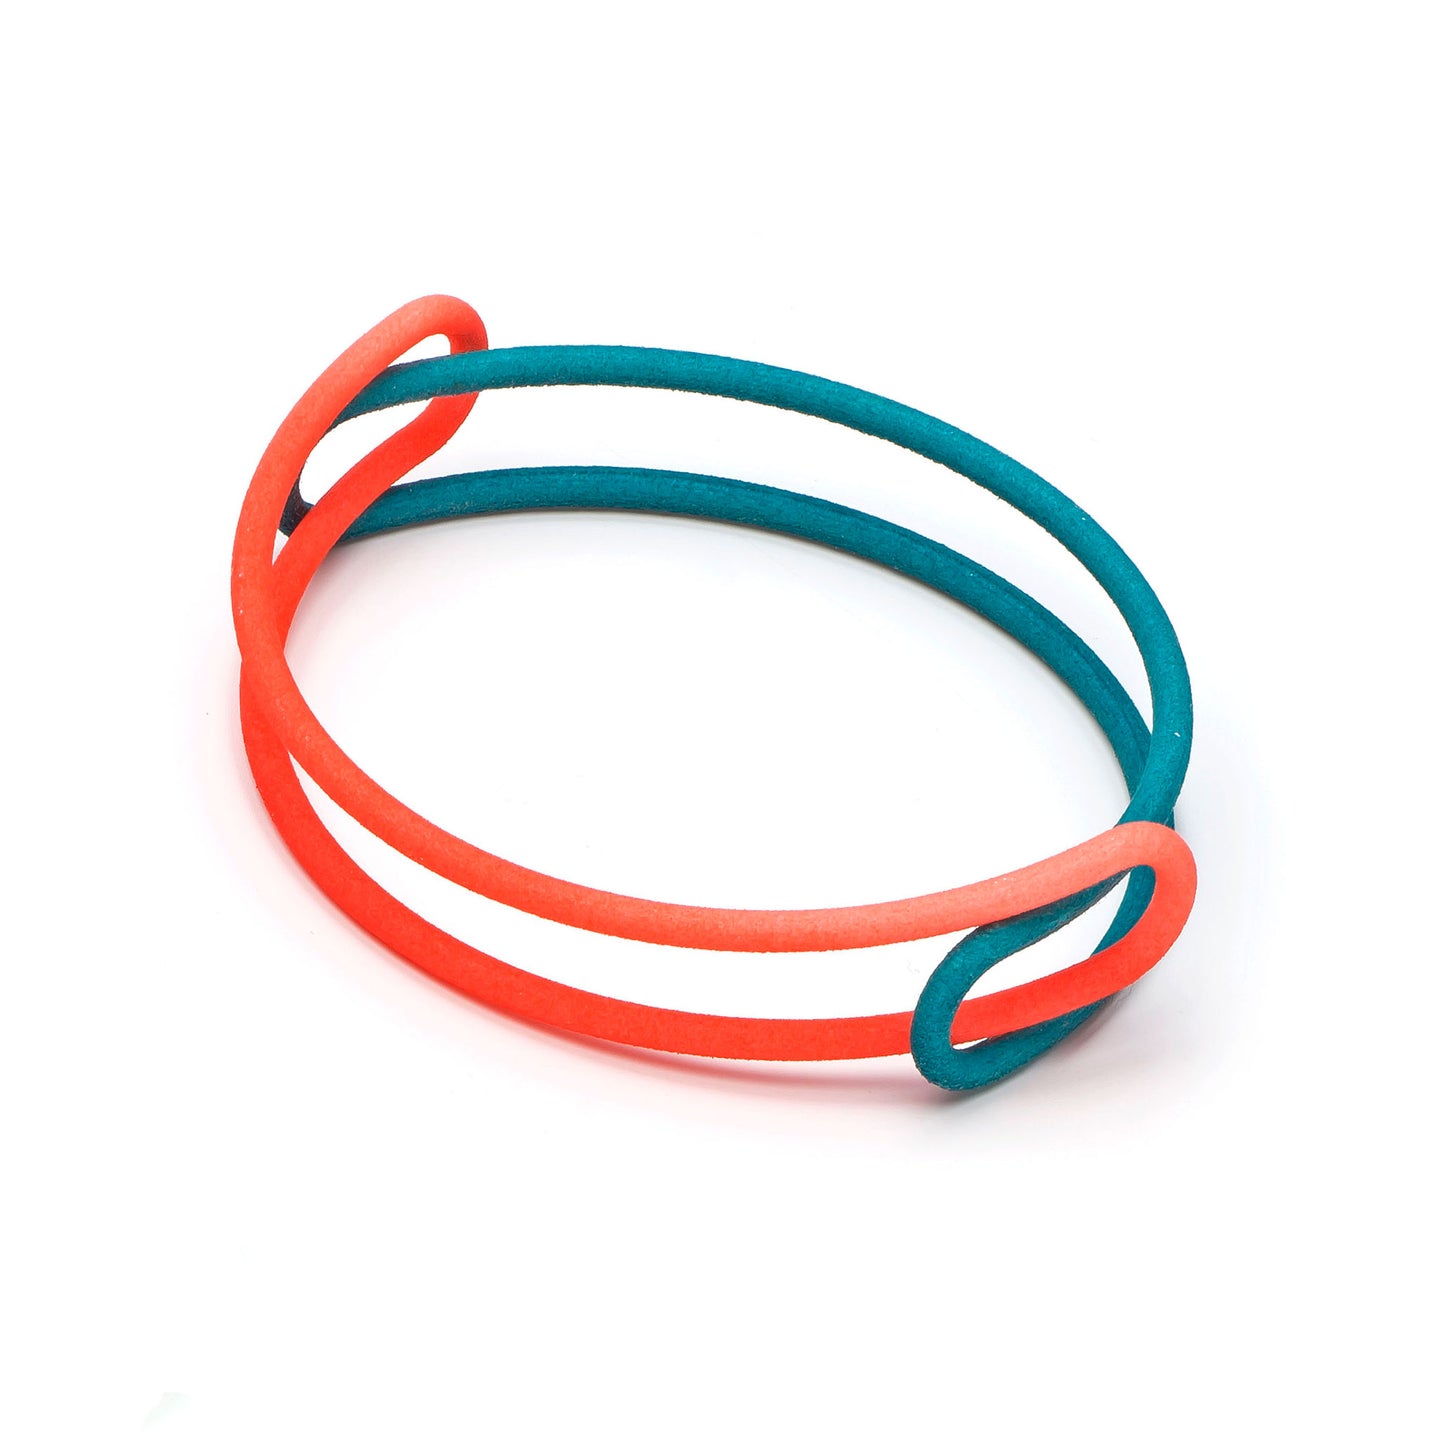 Orange and teal nylon interlinked loop bangle